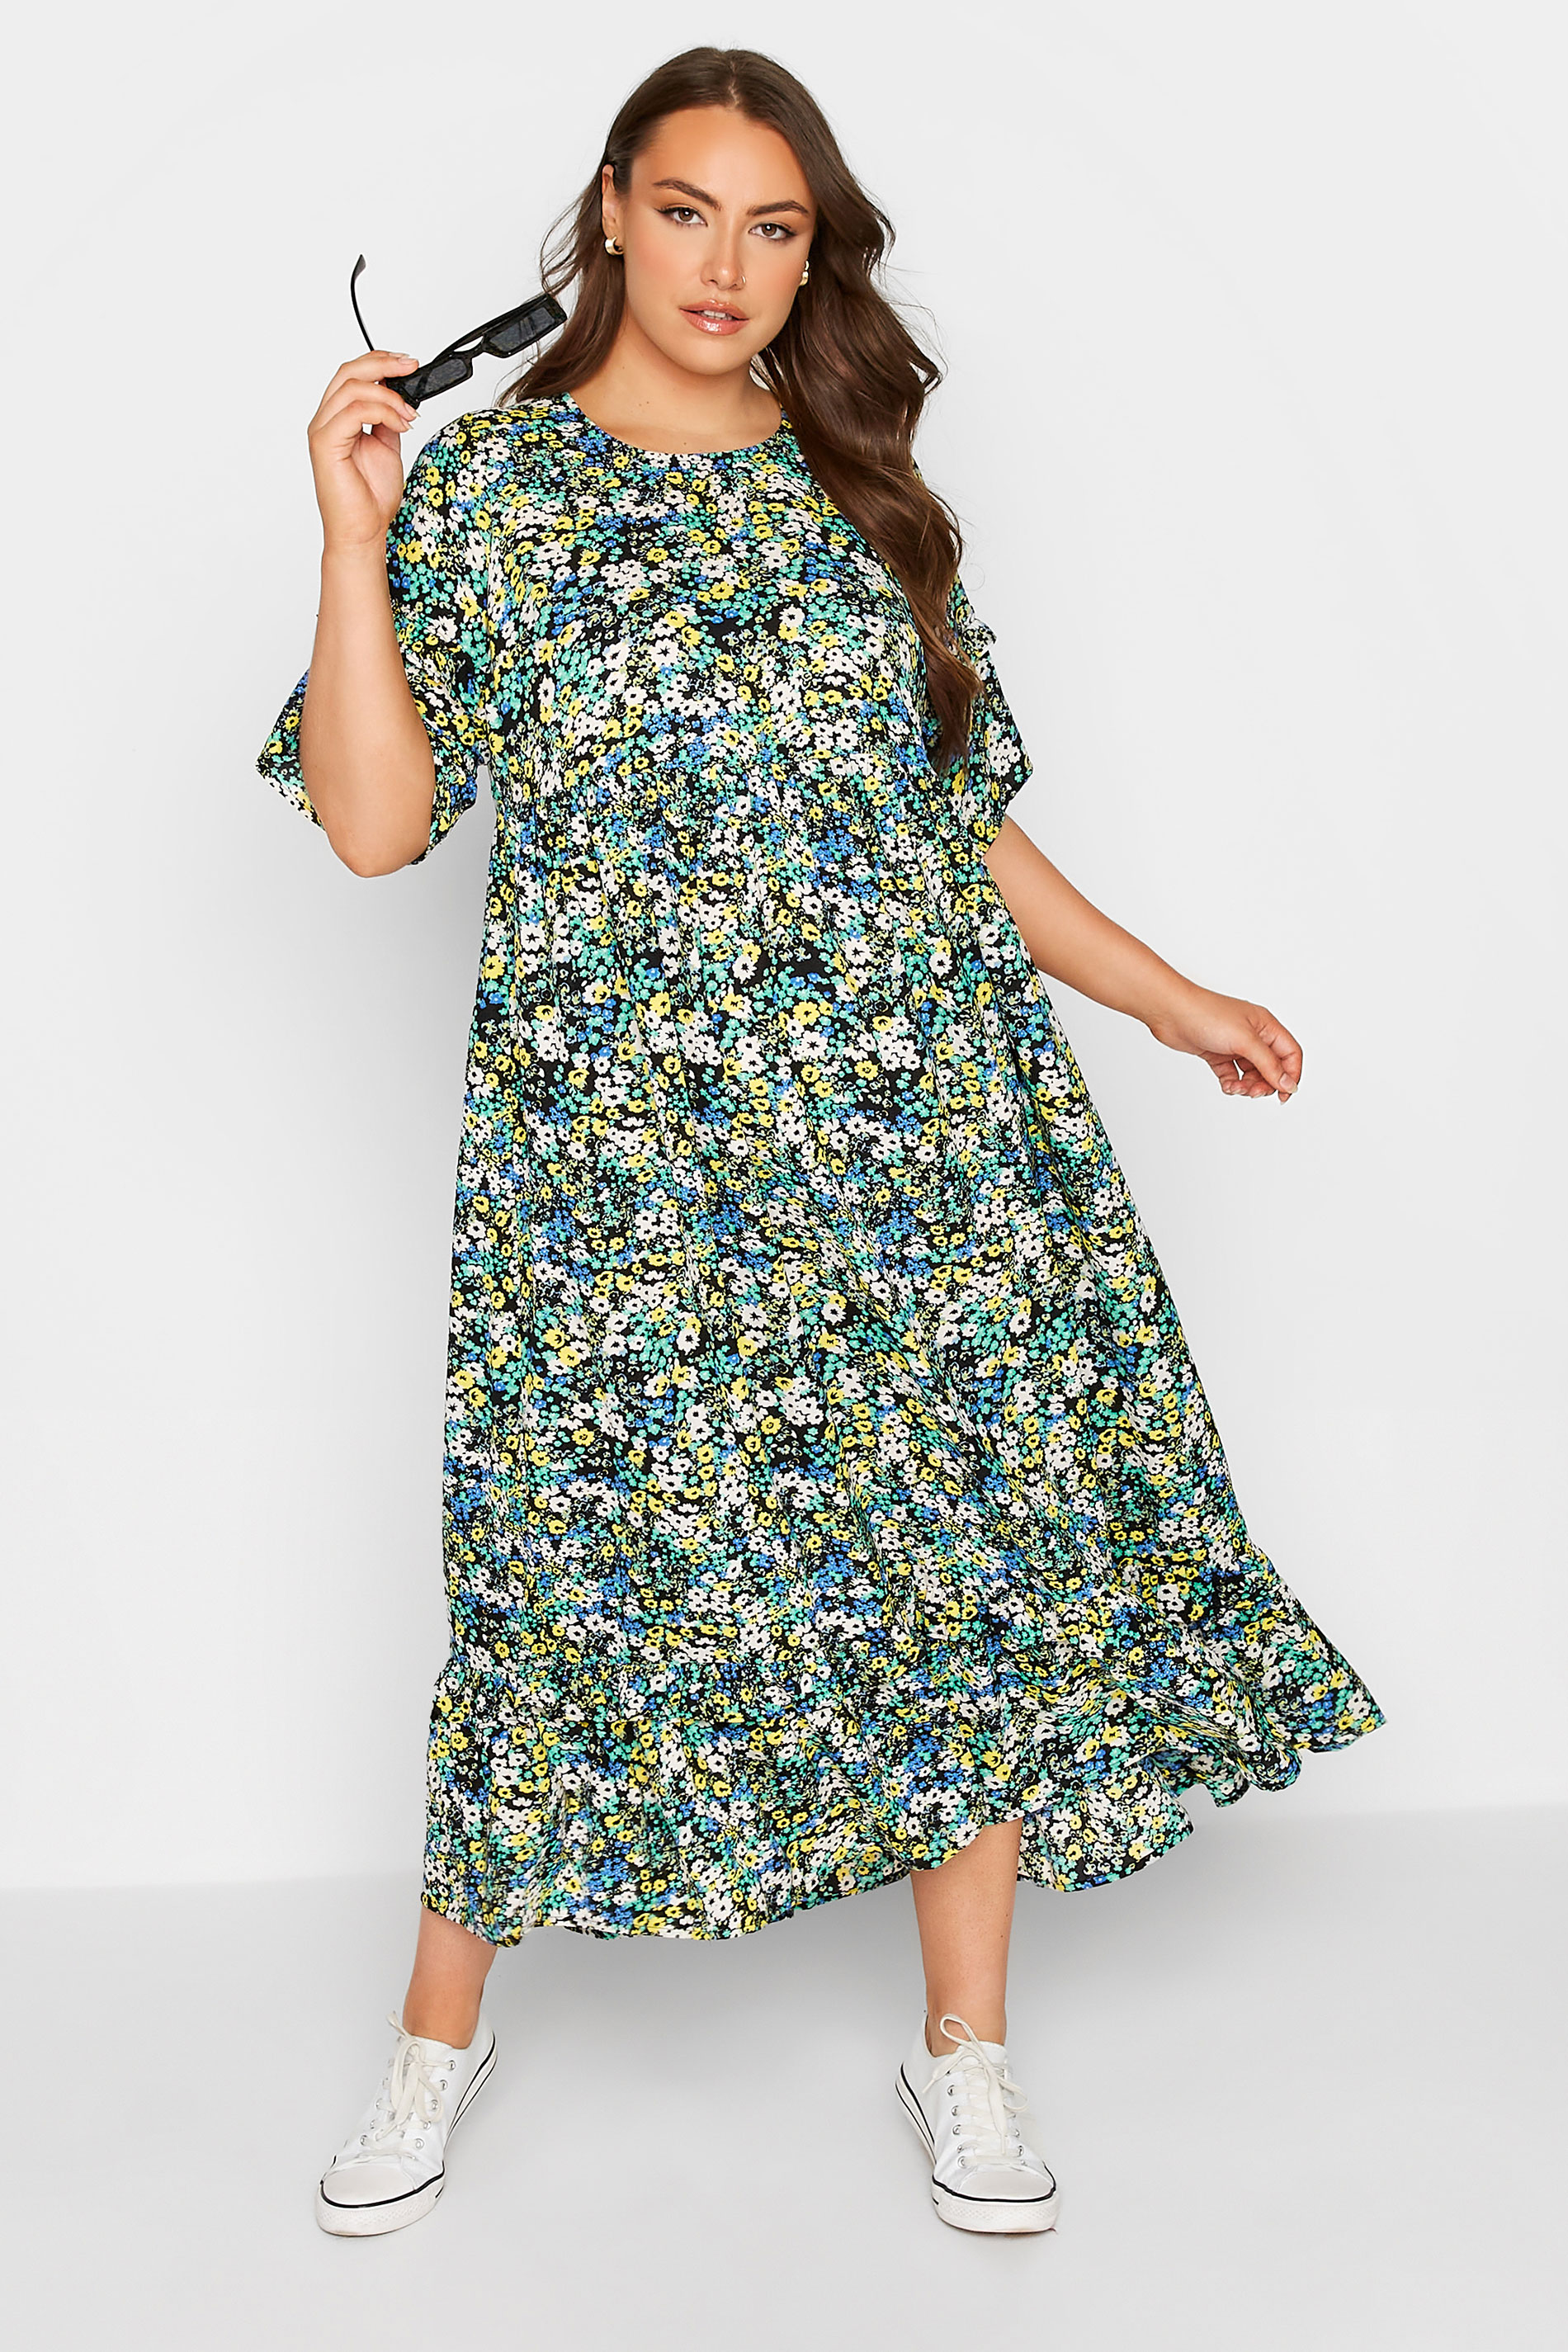 Plus Size Black Floral Print Maxi Dress | Yours Clothing 2